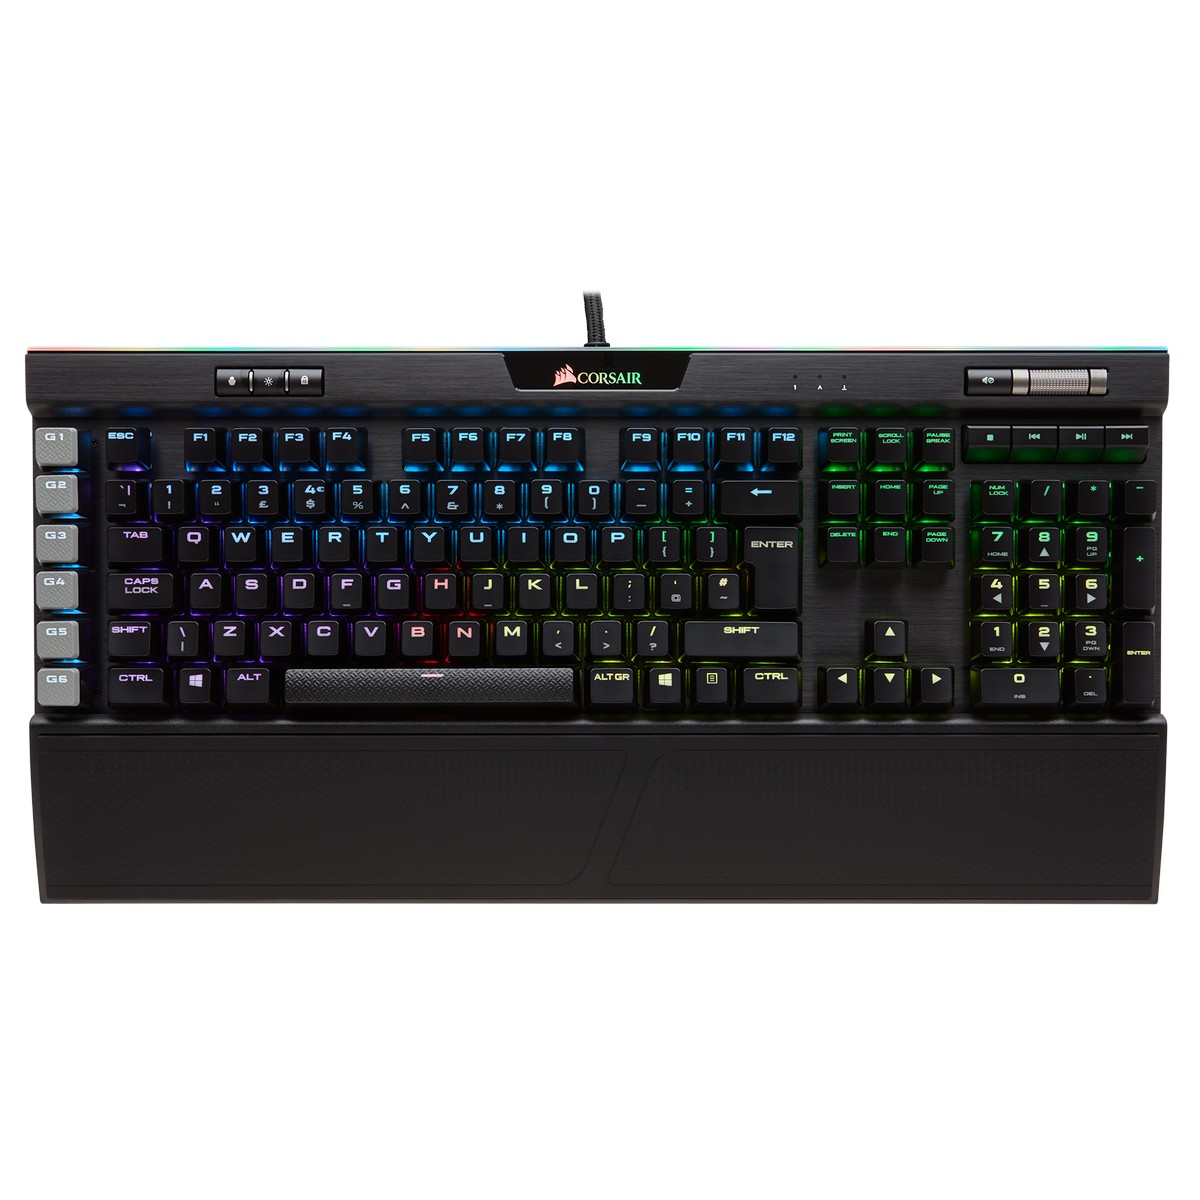 B Grade Corsair Gaming K95 RGB PLATINUM Mechanical Keyboard Backlit RGB LED Cherry MX Br